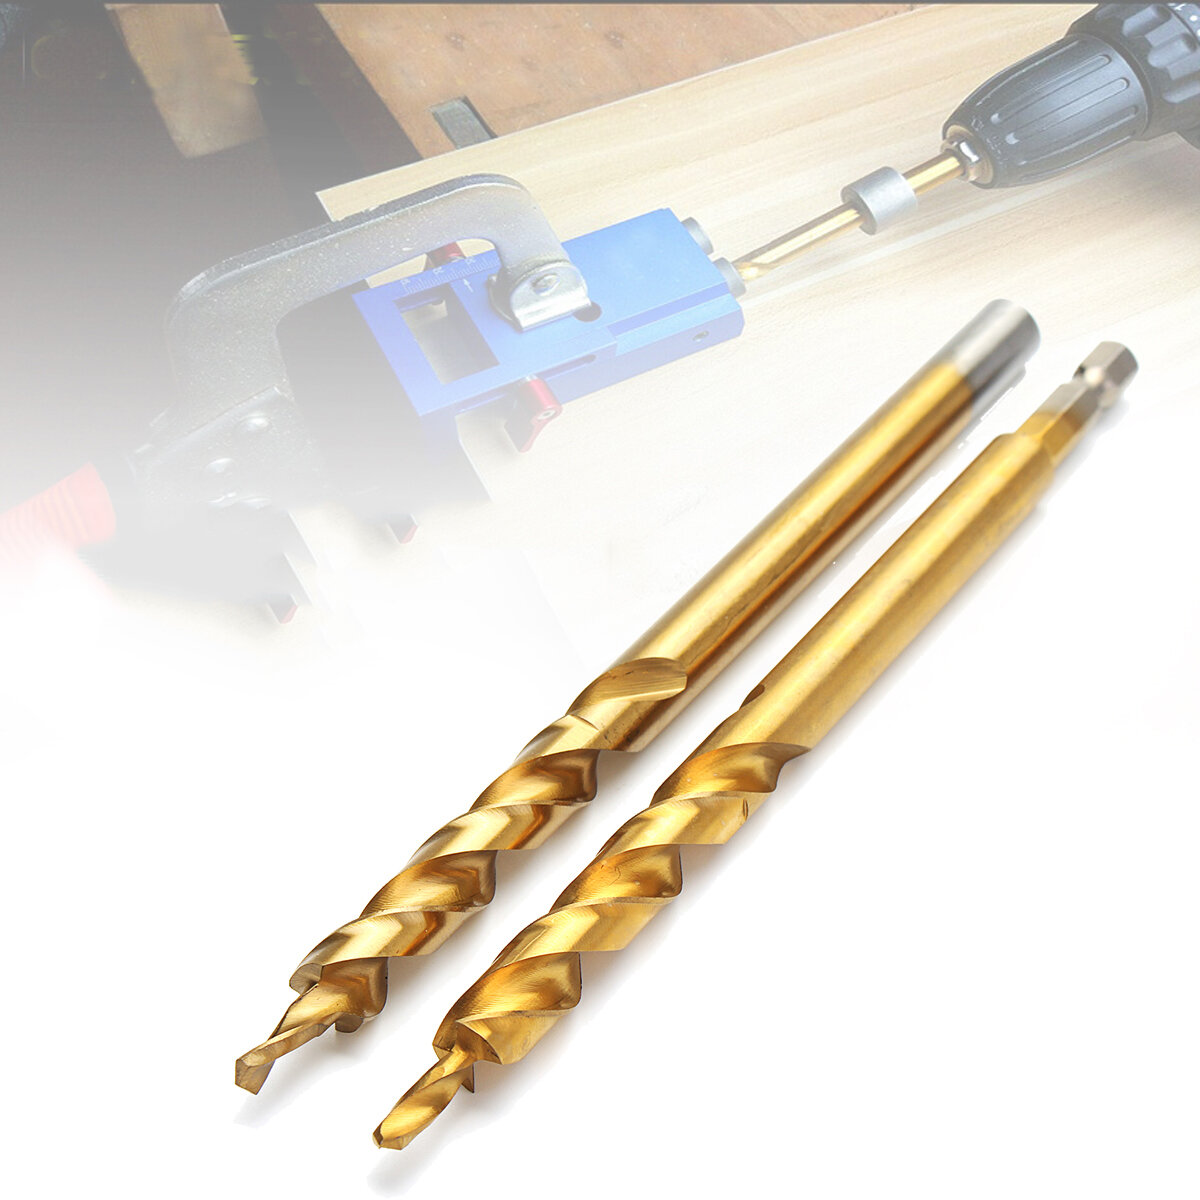 

Drillpro 9.5mm Twist Step Drill Bit 3/8" Round/Hex Shank Drill for Woodworking Pocket Hole Jig